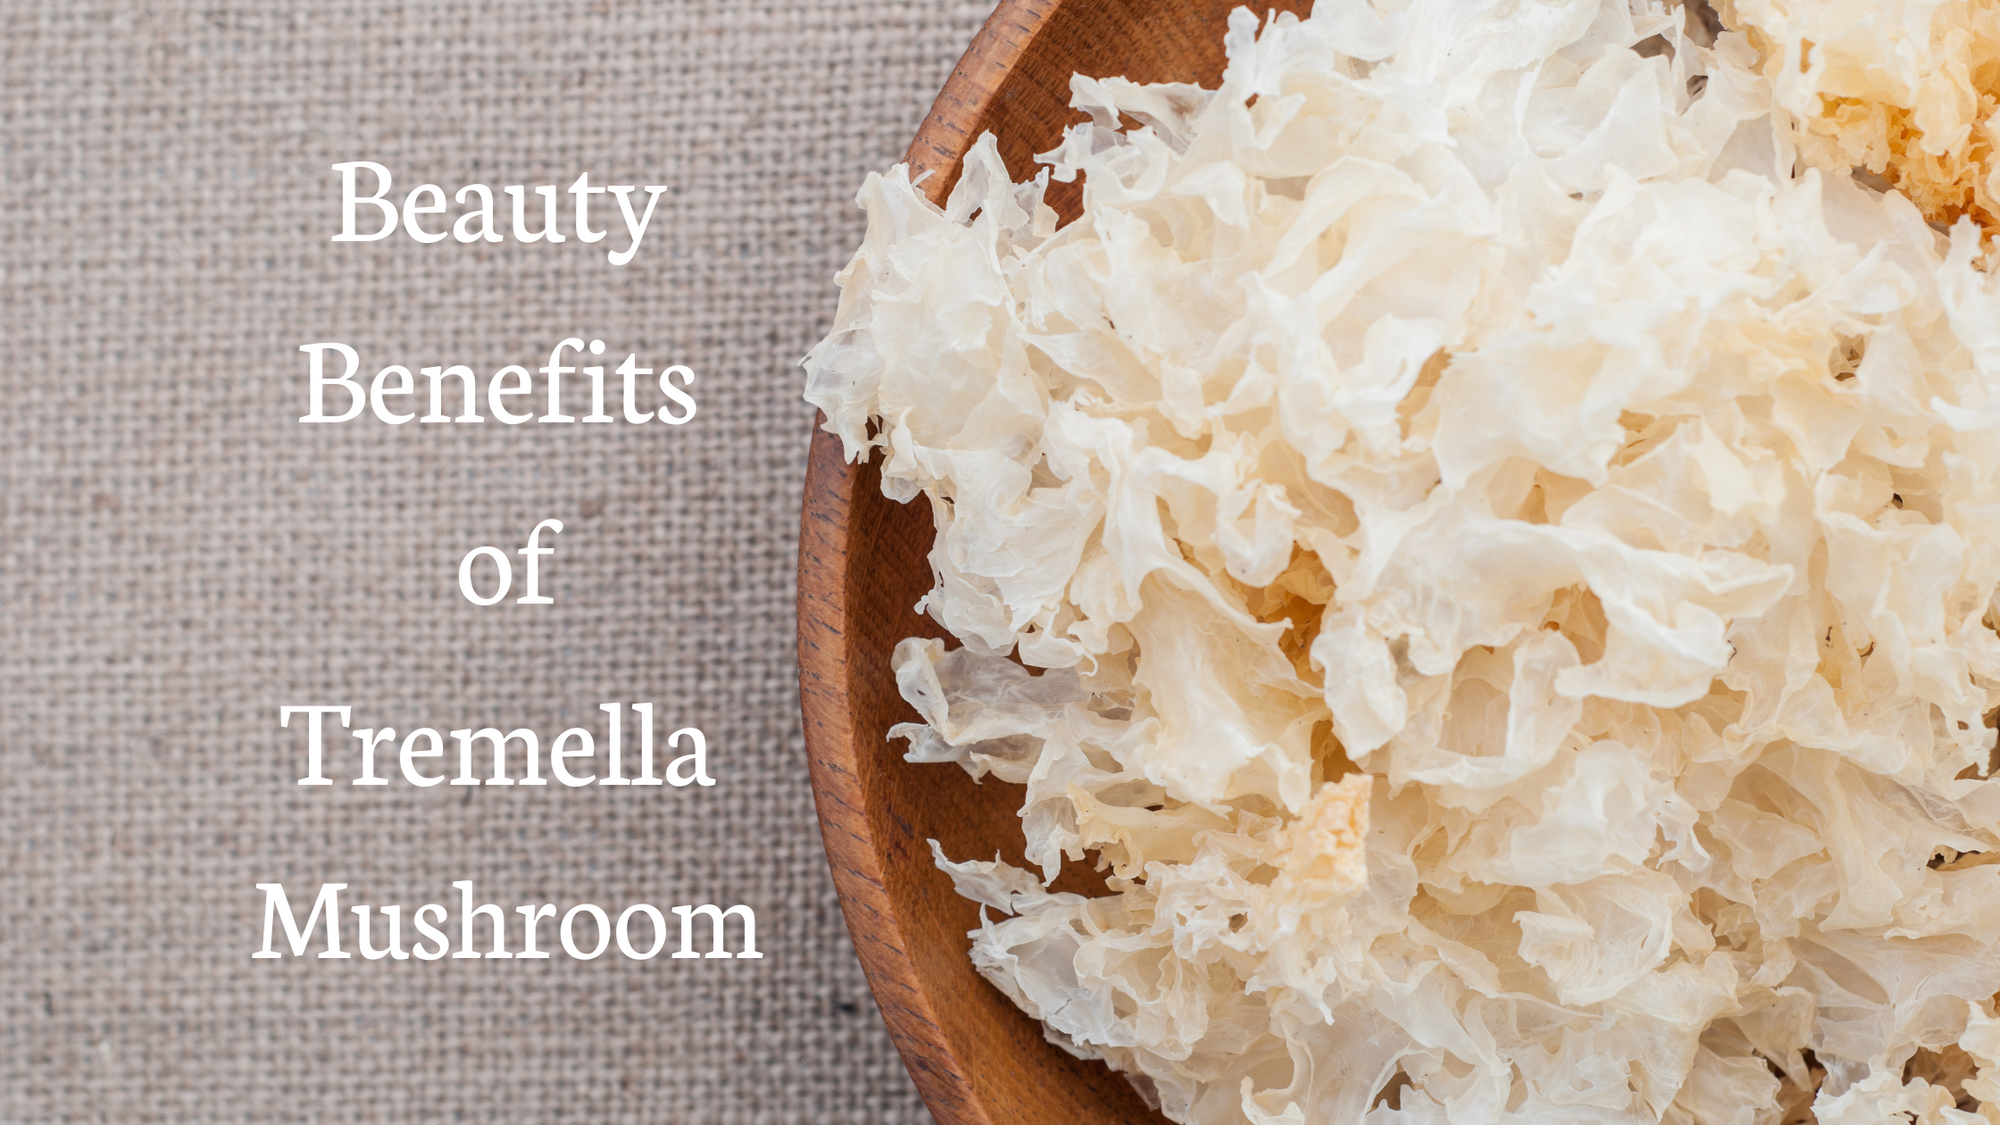 The Beauty Benefits of Tremella Mushroom